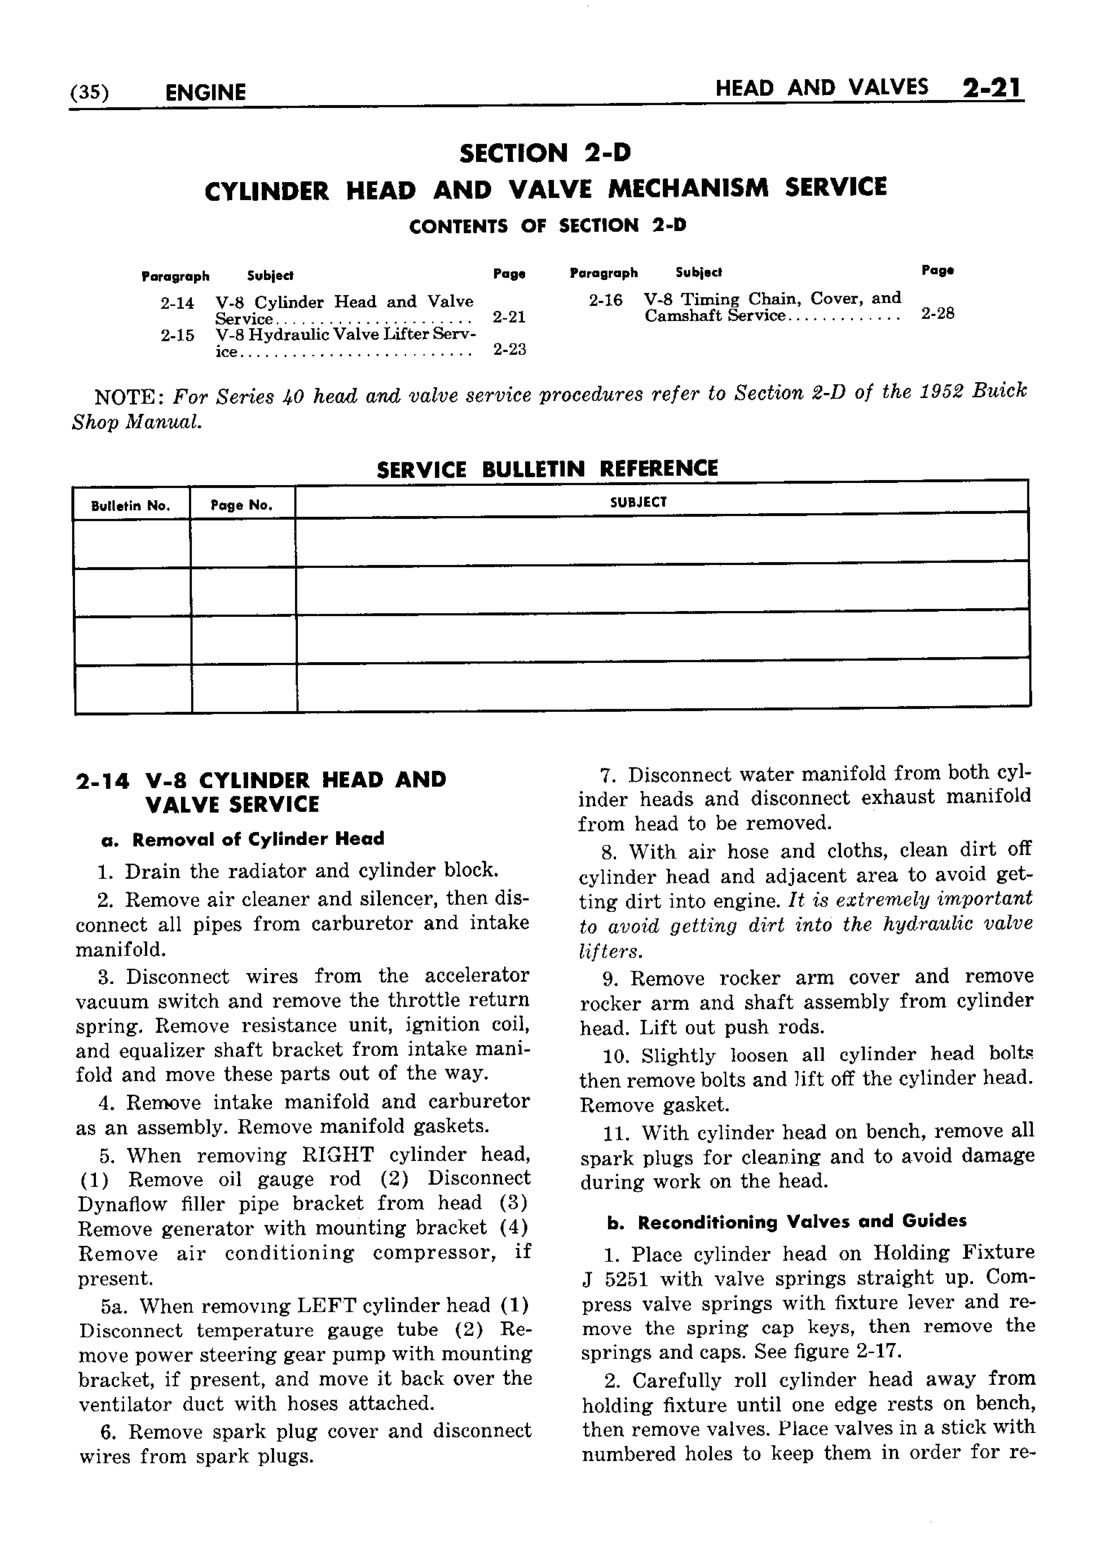 n_03 1953 Buick Shop Manual - Engine-021-021.jpg